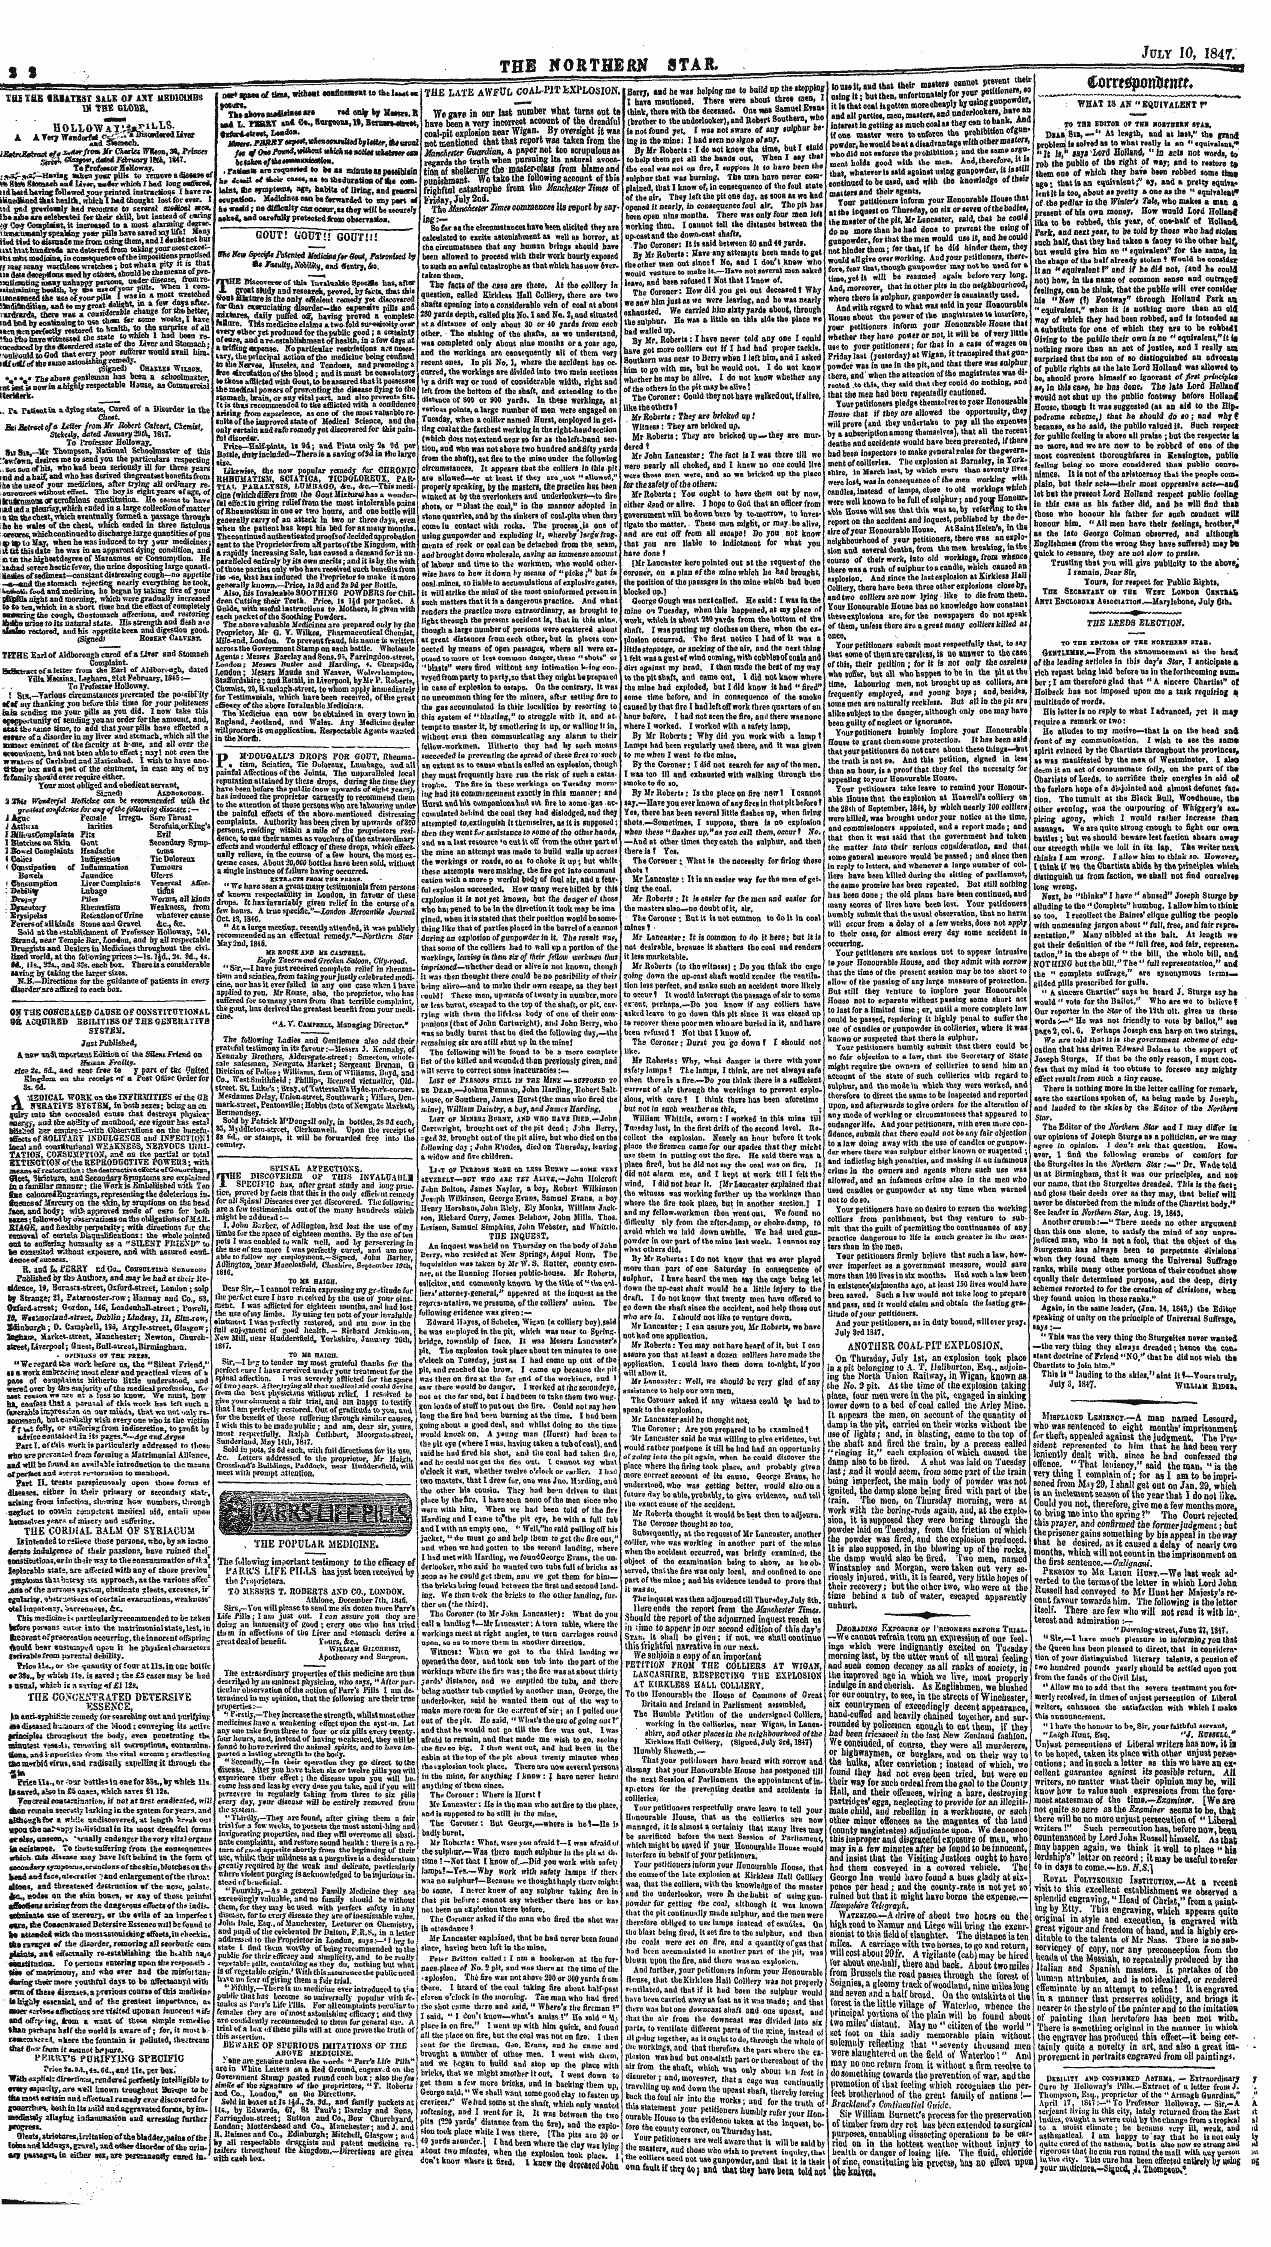 Northern Star (1837-1852): jS F Y, 3rd edition: 2